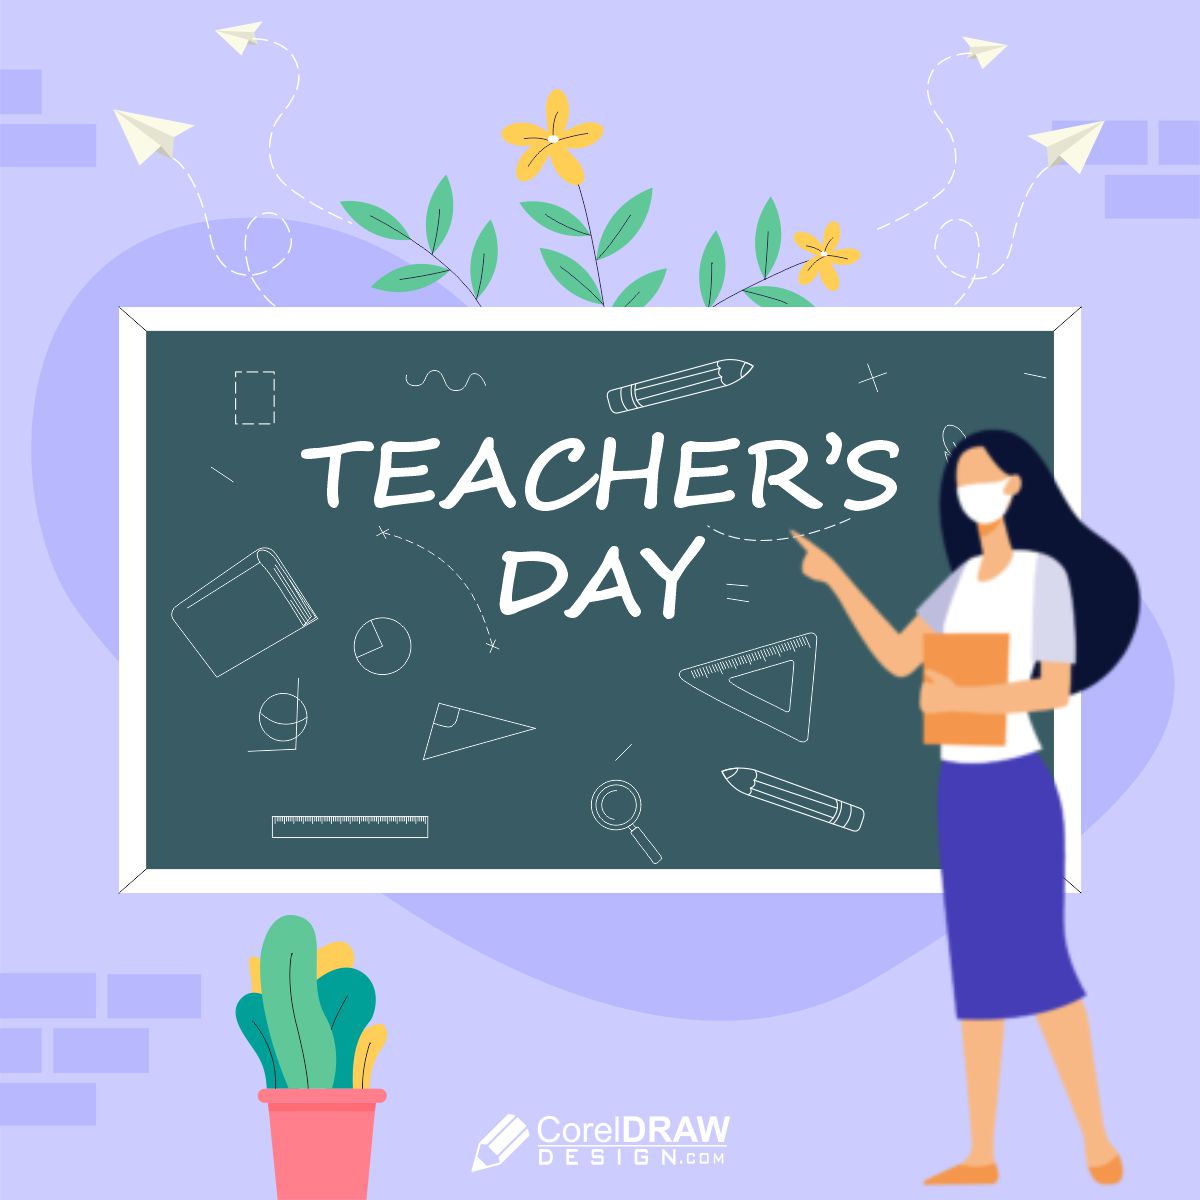 Teacher Day postar vector design free image